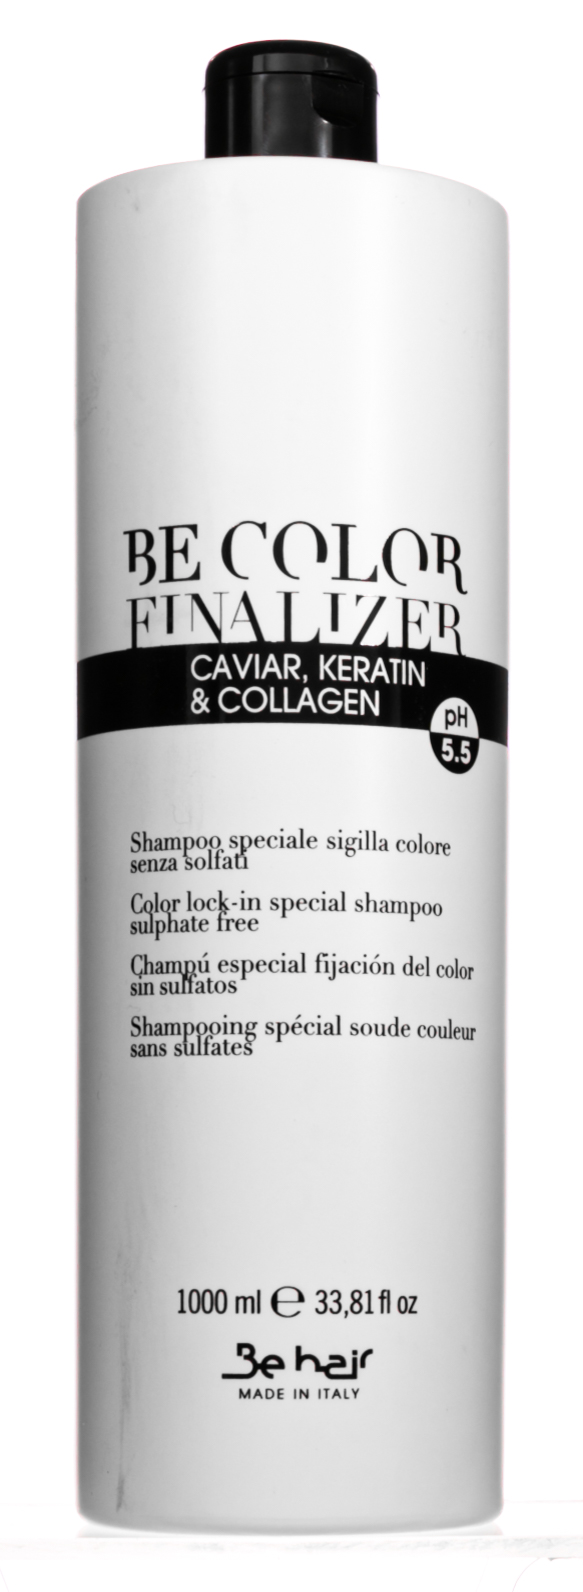 Be Hair Специальный шампунь-фиксатор после окрашивания волос, 1000 мл (Be Hair, Be Color)